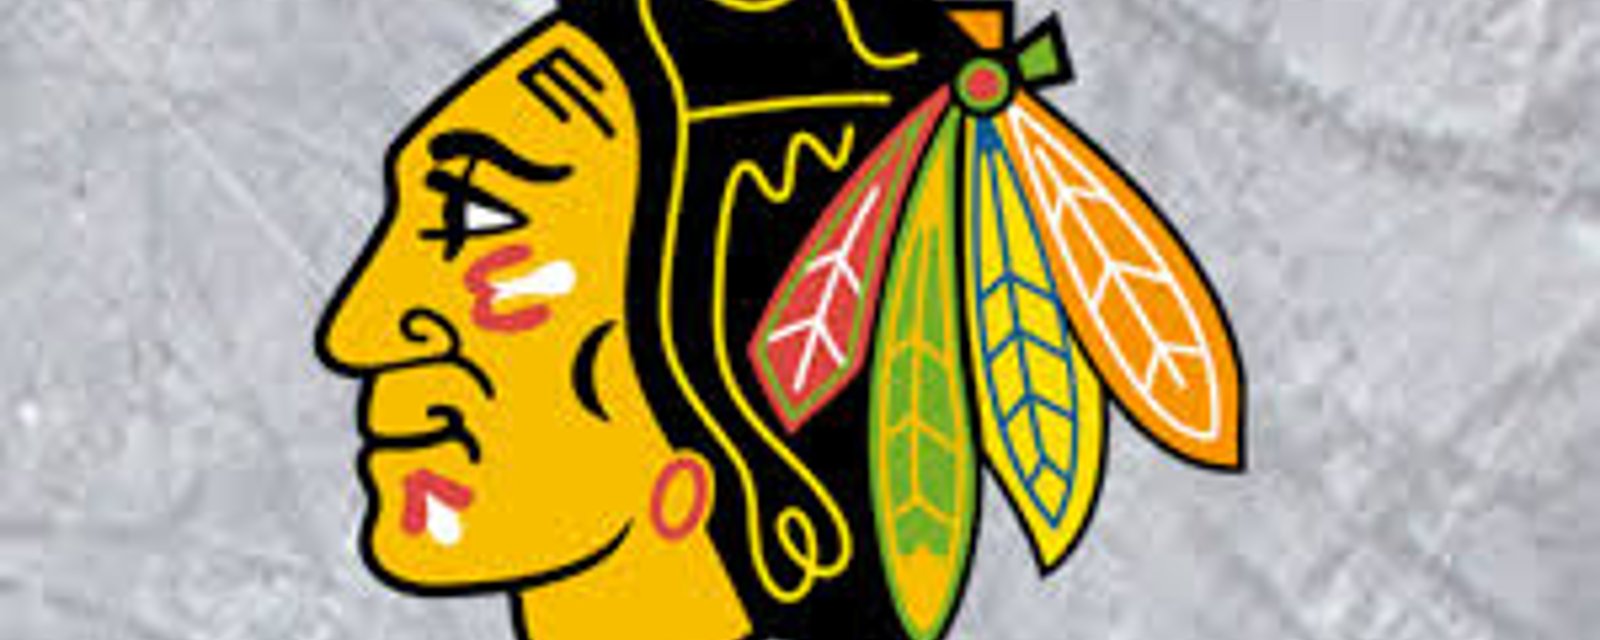 Pressure back on Hawks to drop their Native American logo